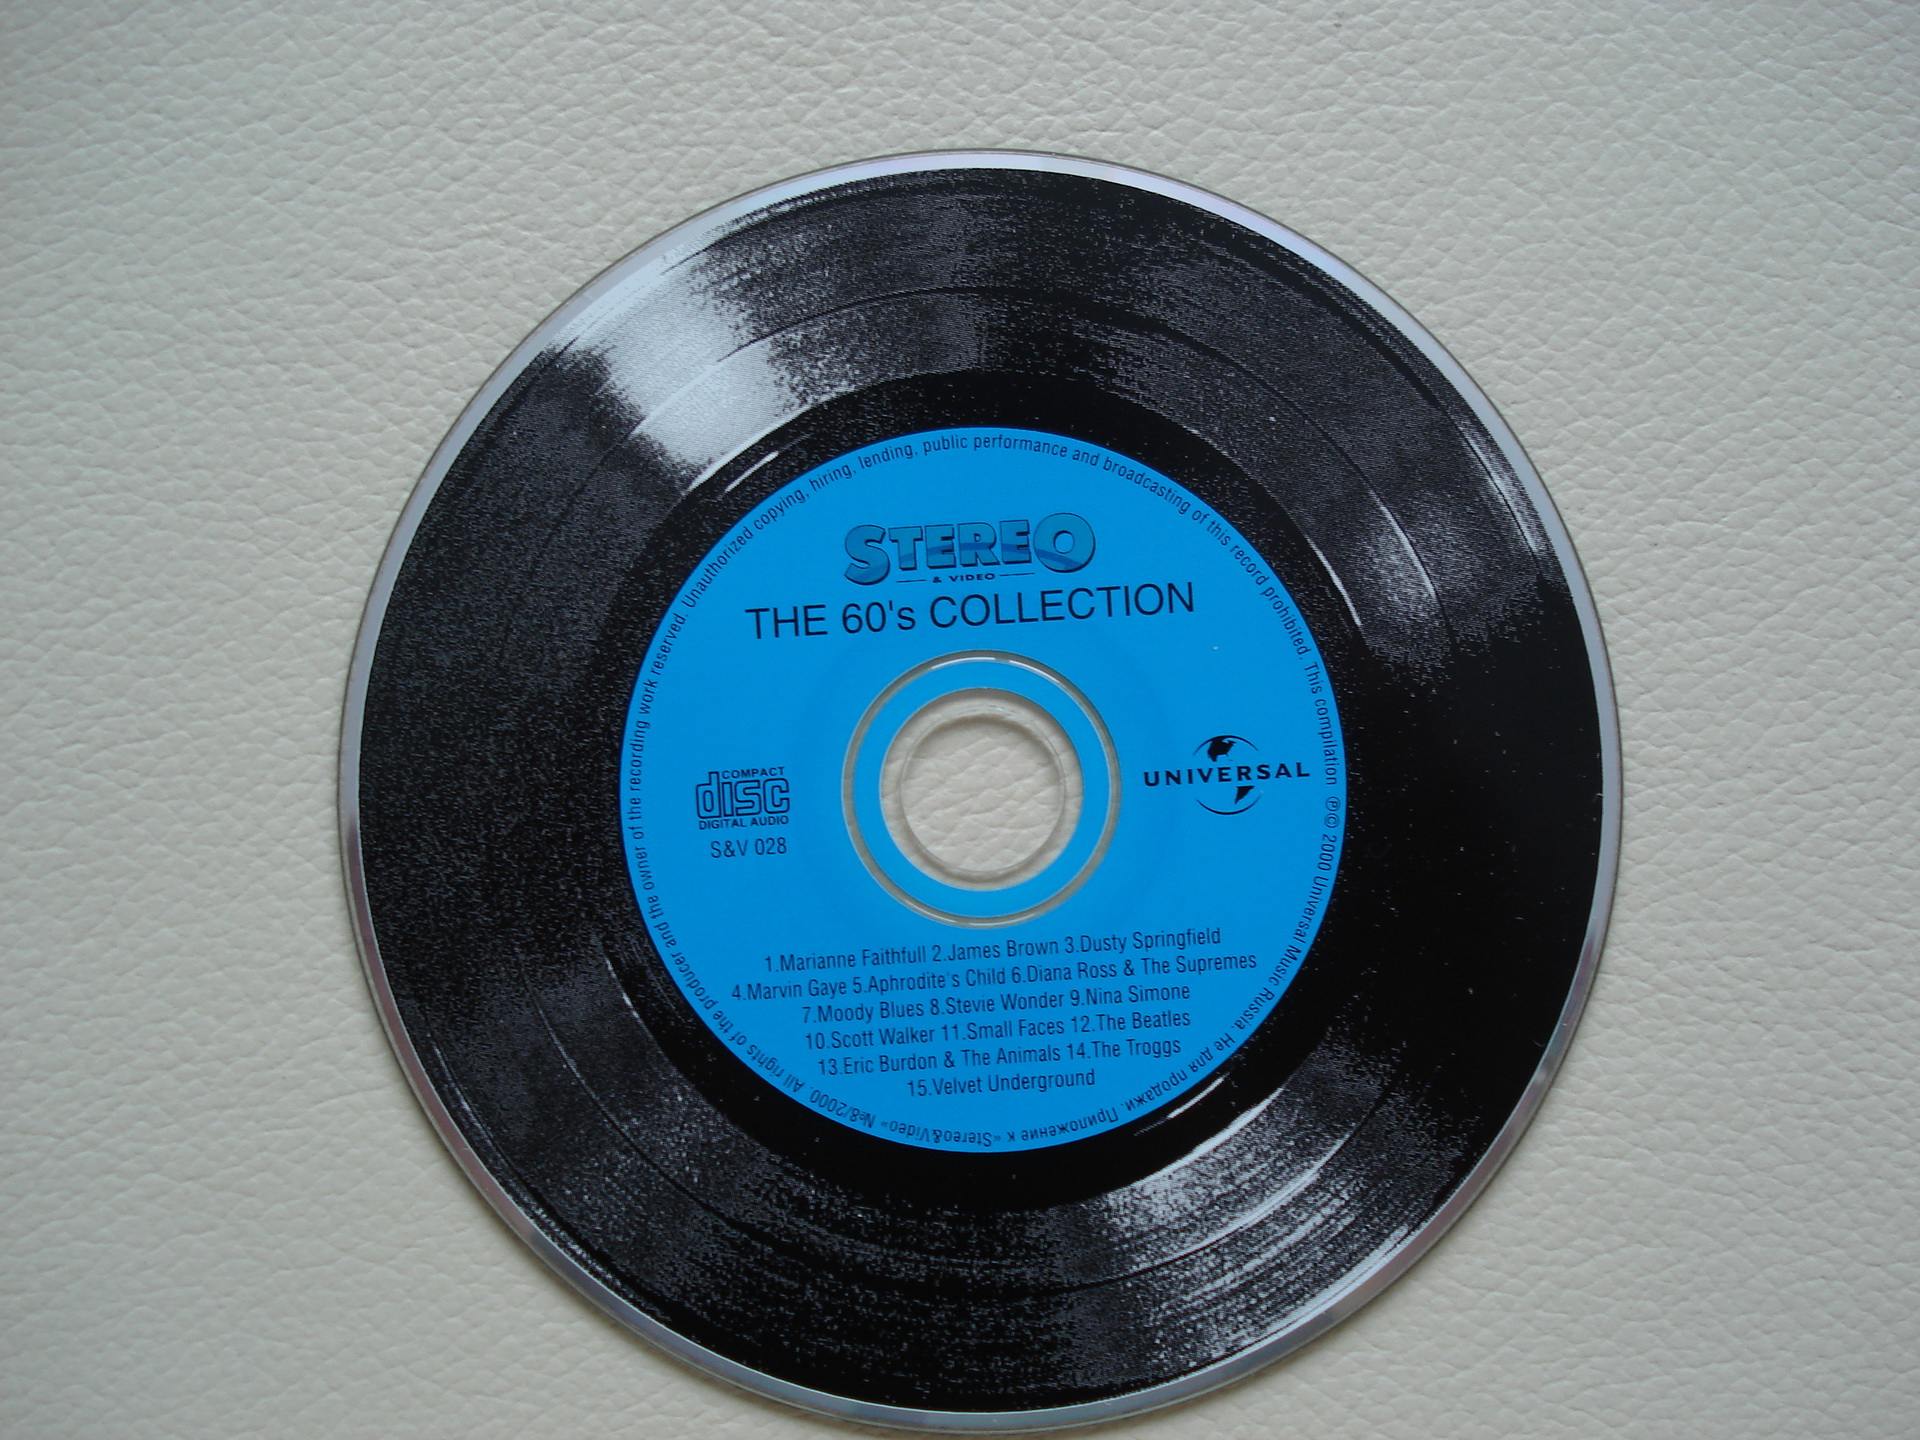 First cd. Советский компакт диск. Первый компакт диск. Первые CD диски. Компакт диски 1980.